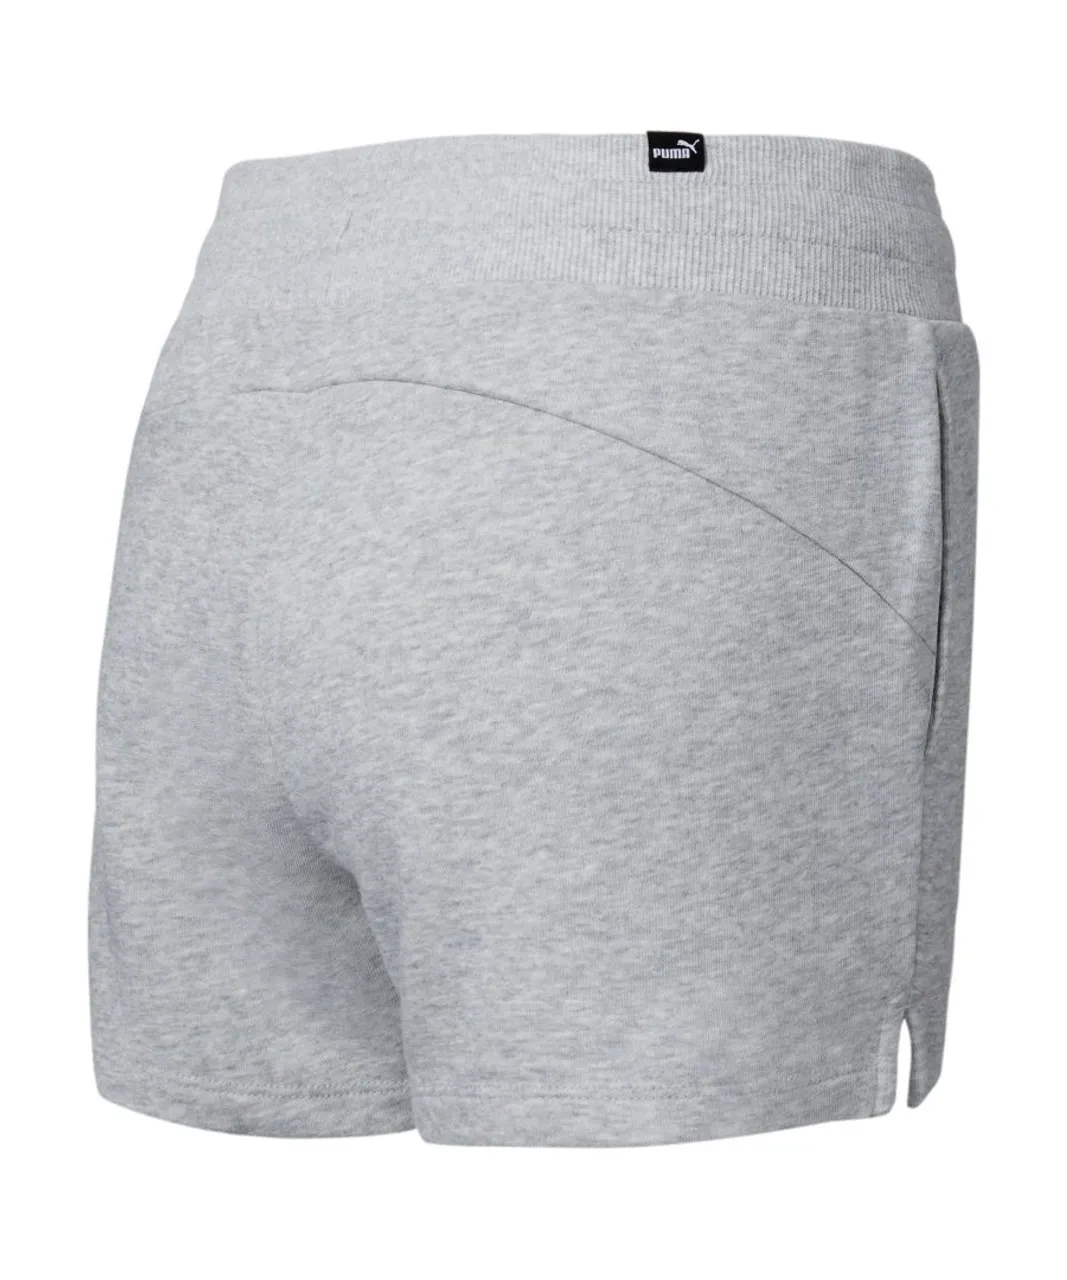 Puma Womens Essentials Sweat Shorts - Grey Cotton